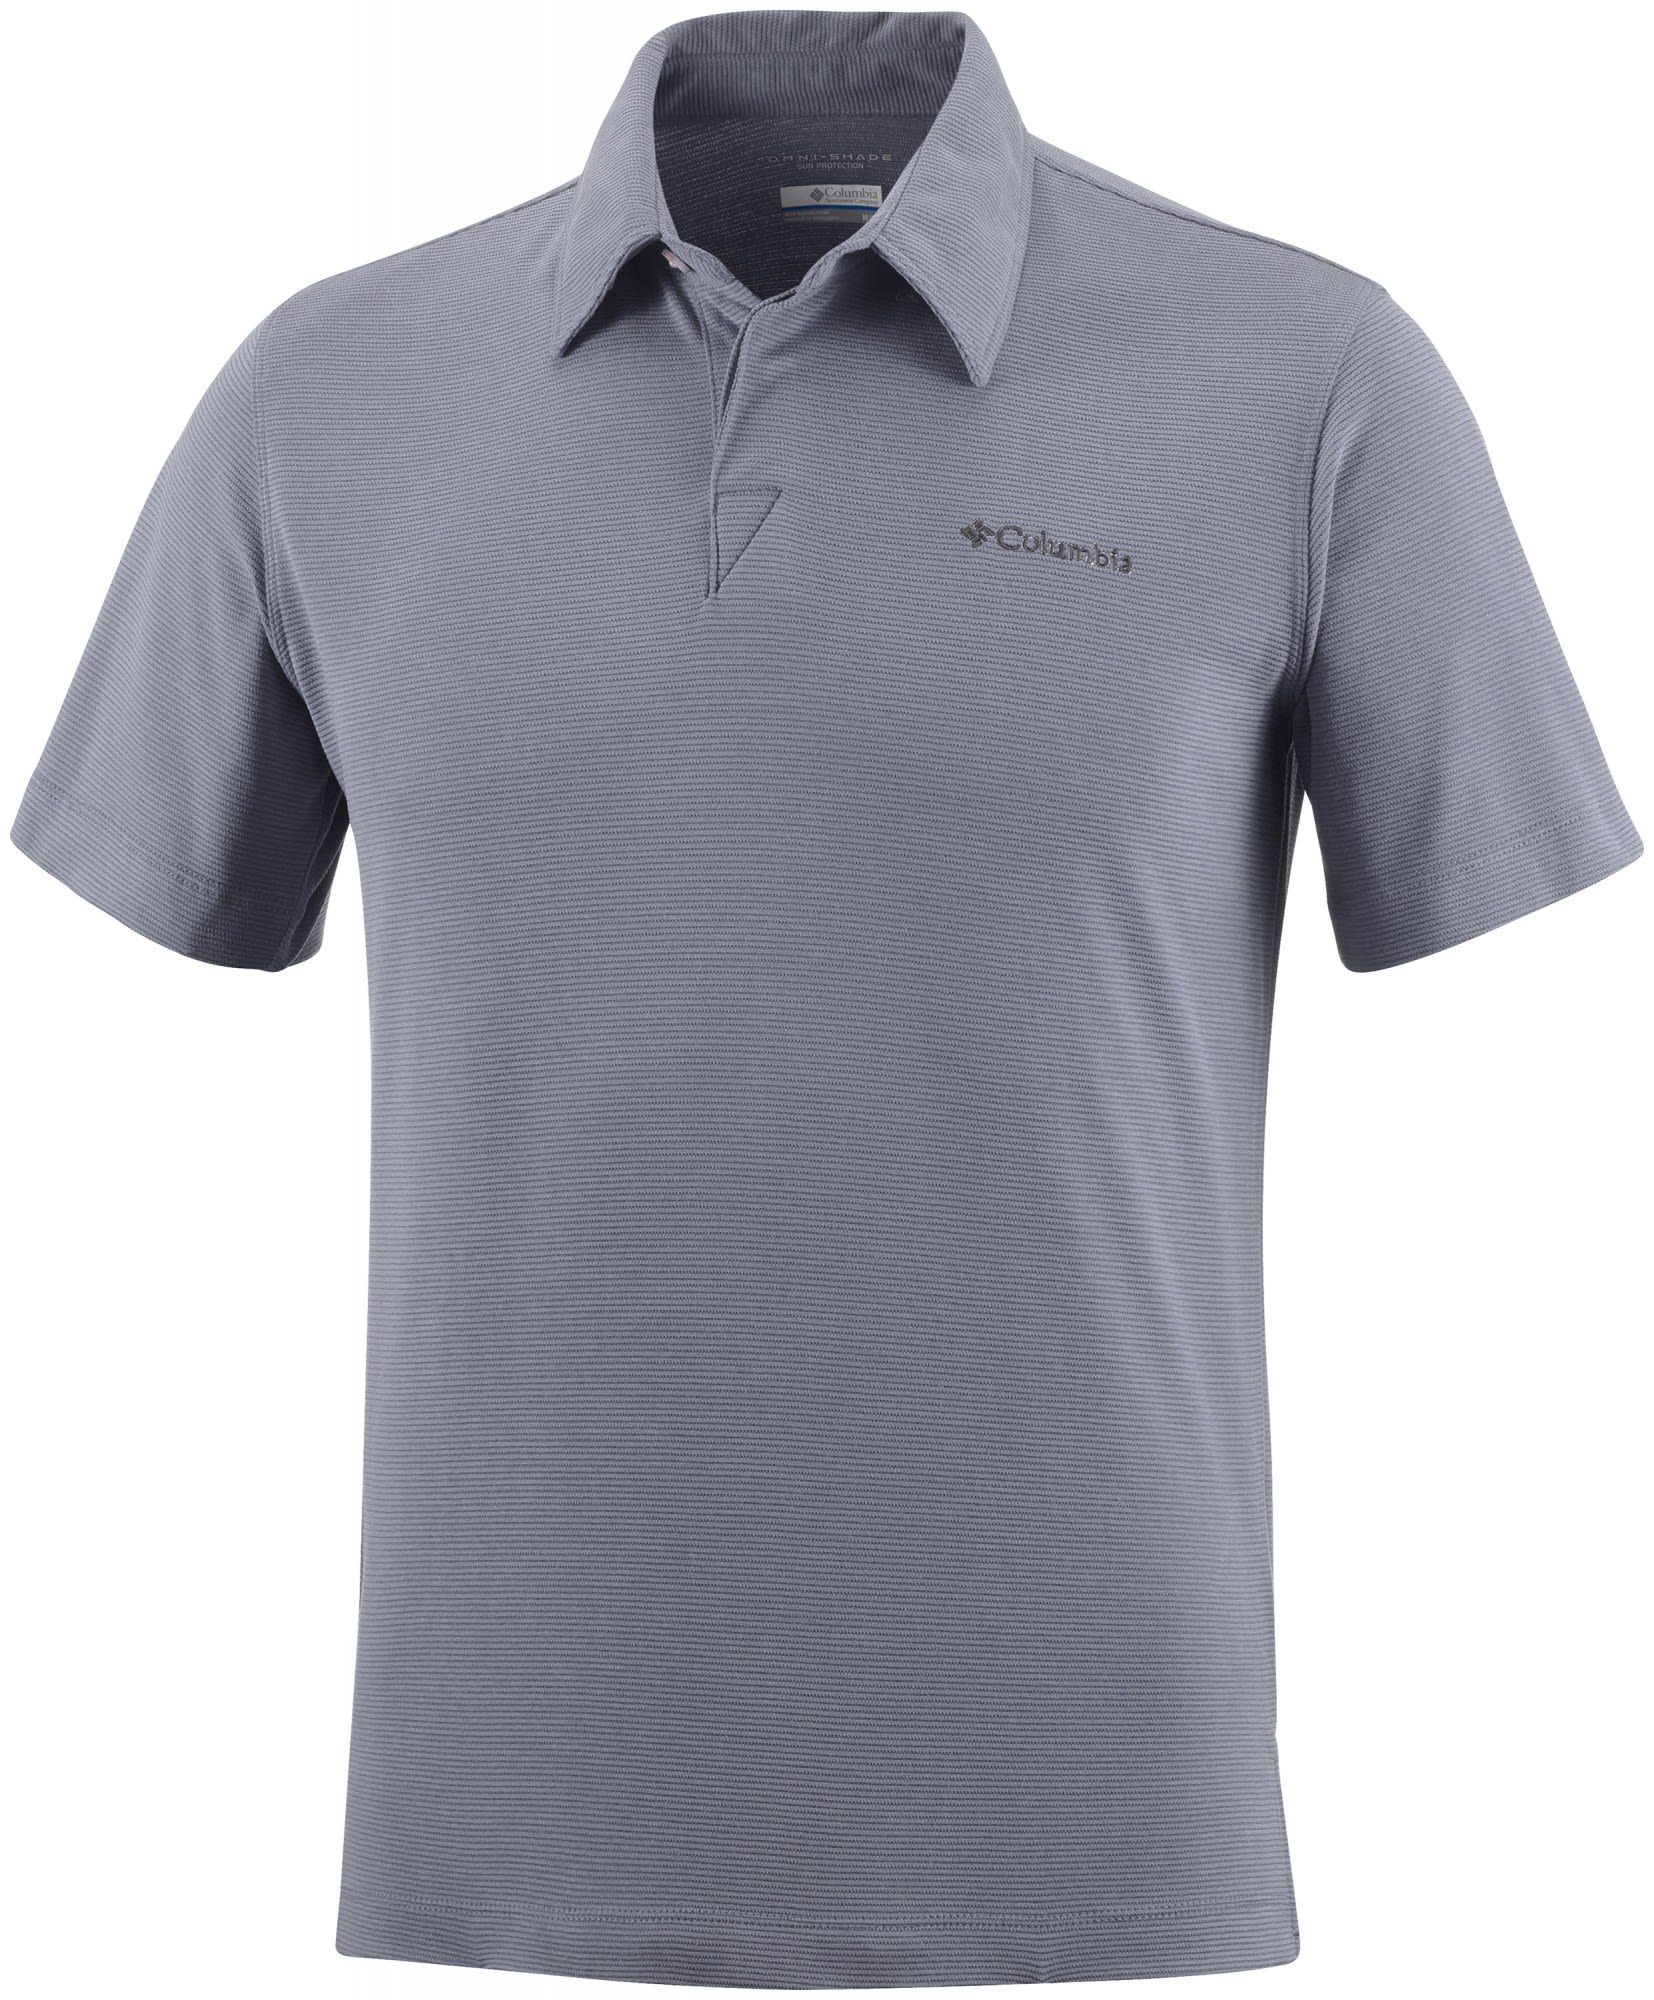 Columbia Sun Ridge Polo Grau- Male Polo Shirts- Grsse S - Farbe Grey Ash unter Columbia